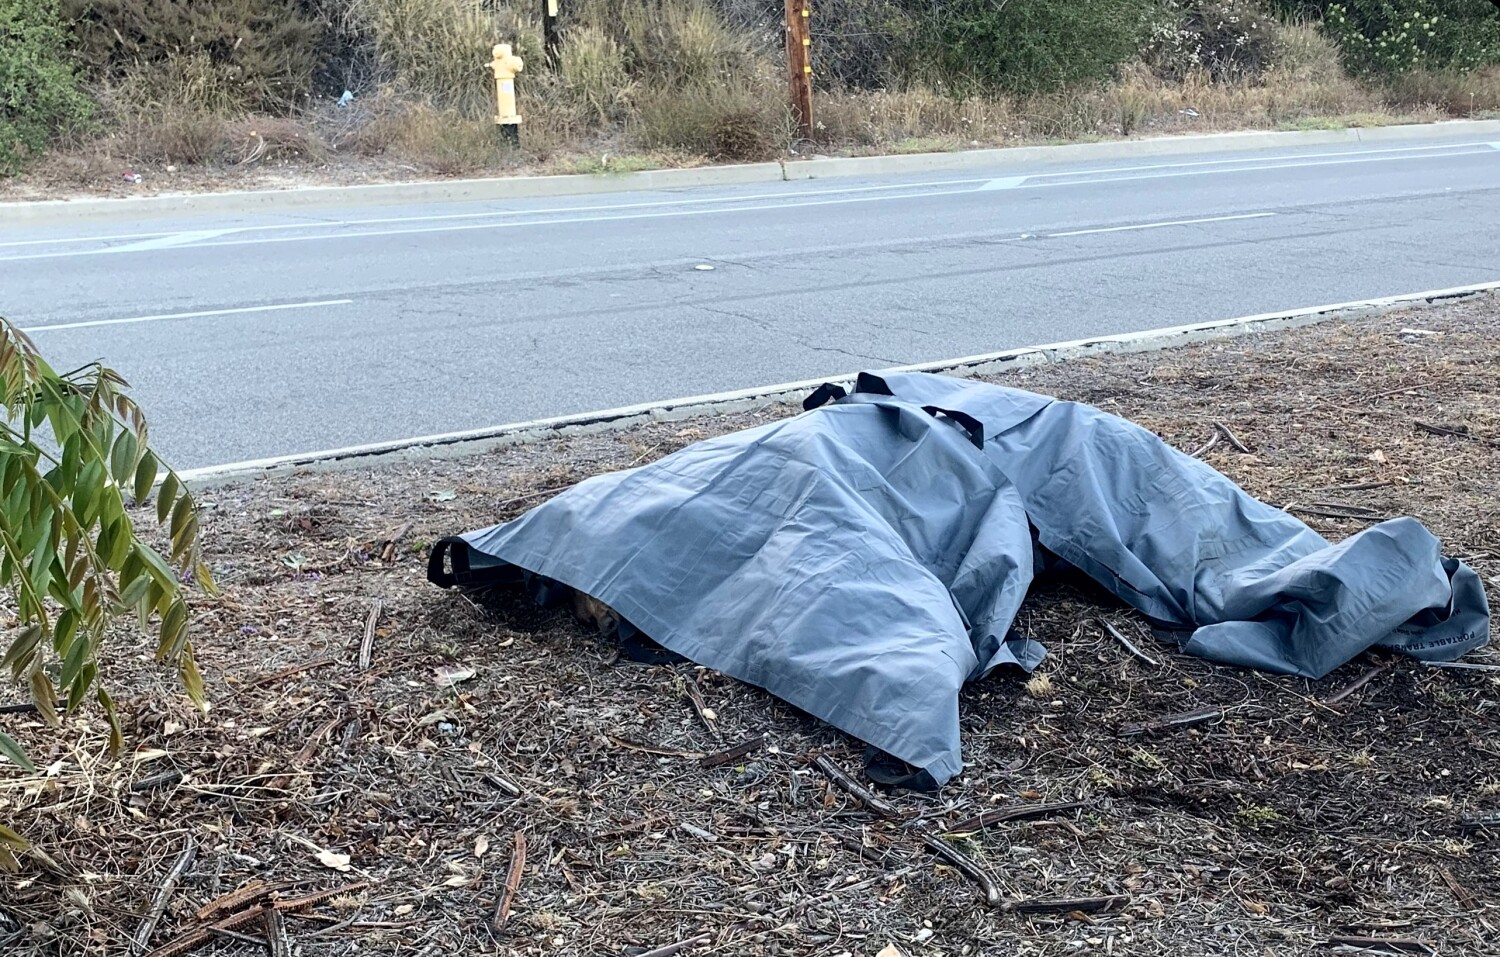 Bear dies after being struck by car in Pasadena